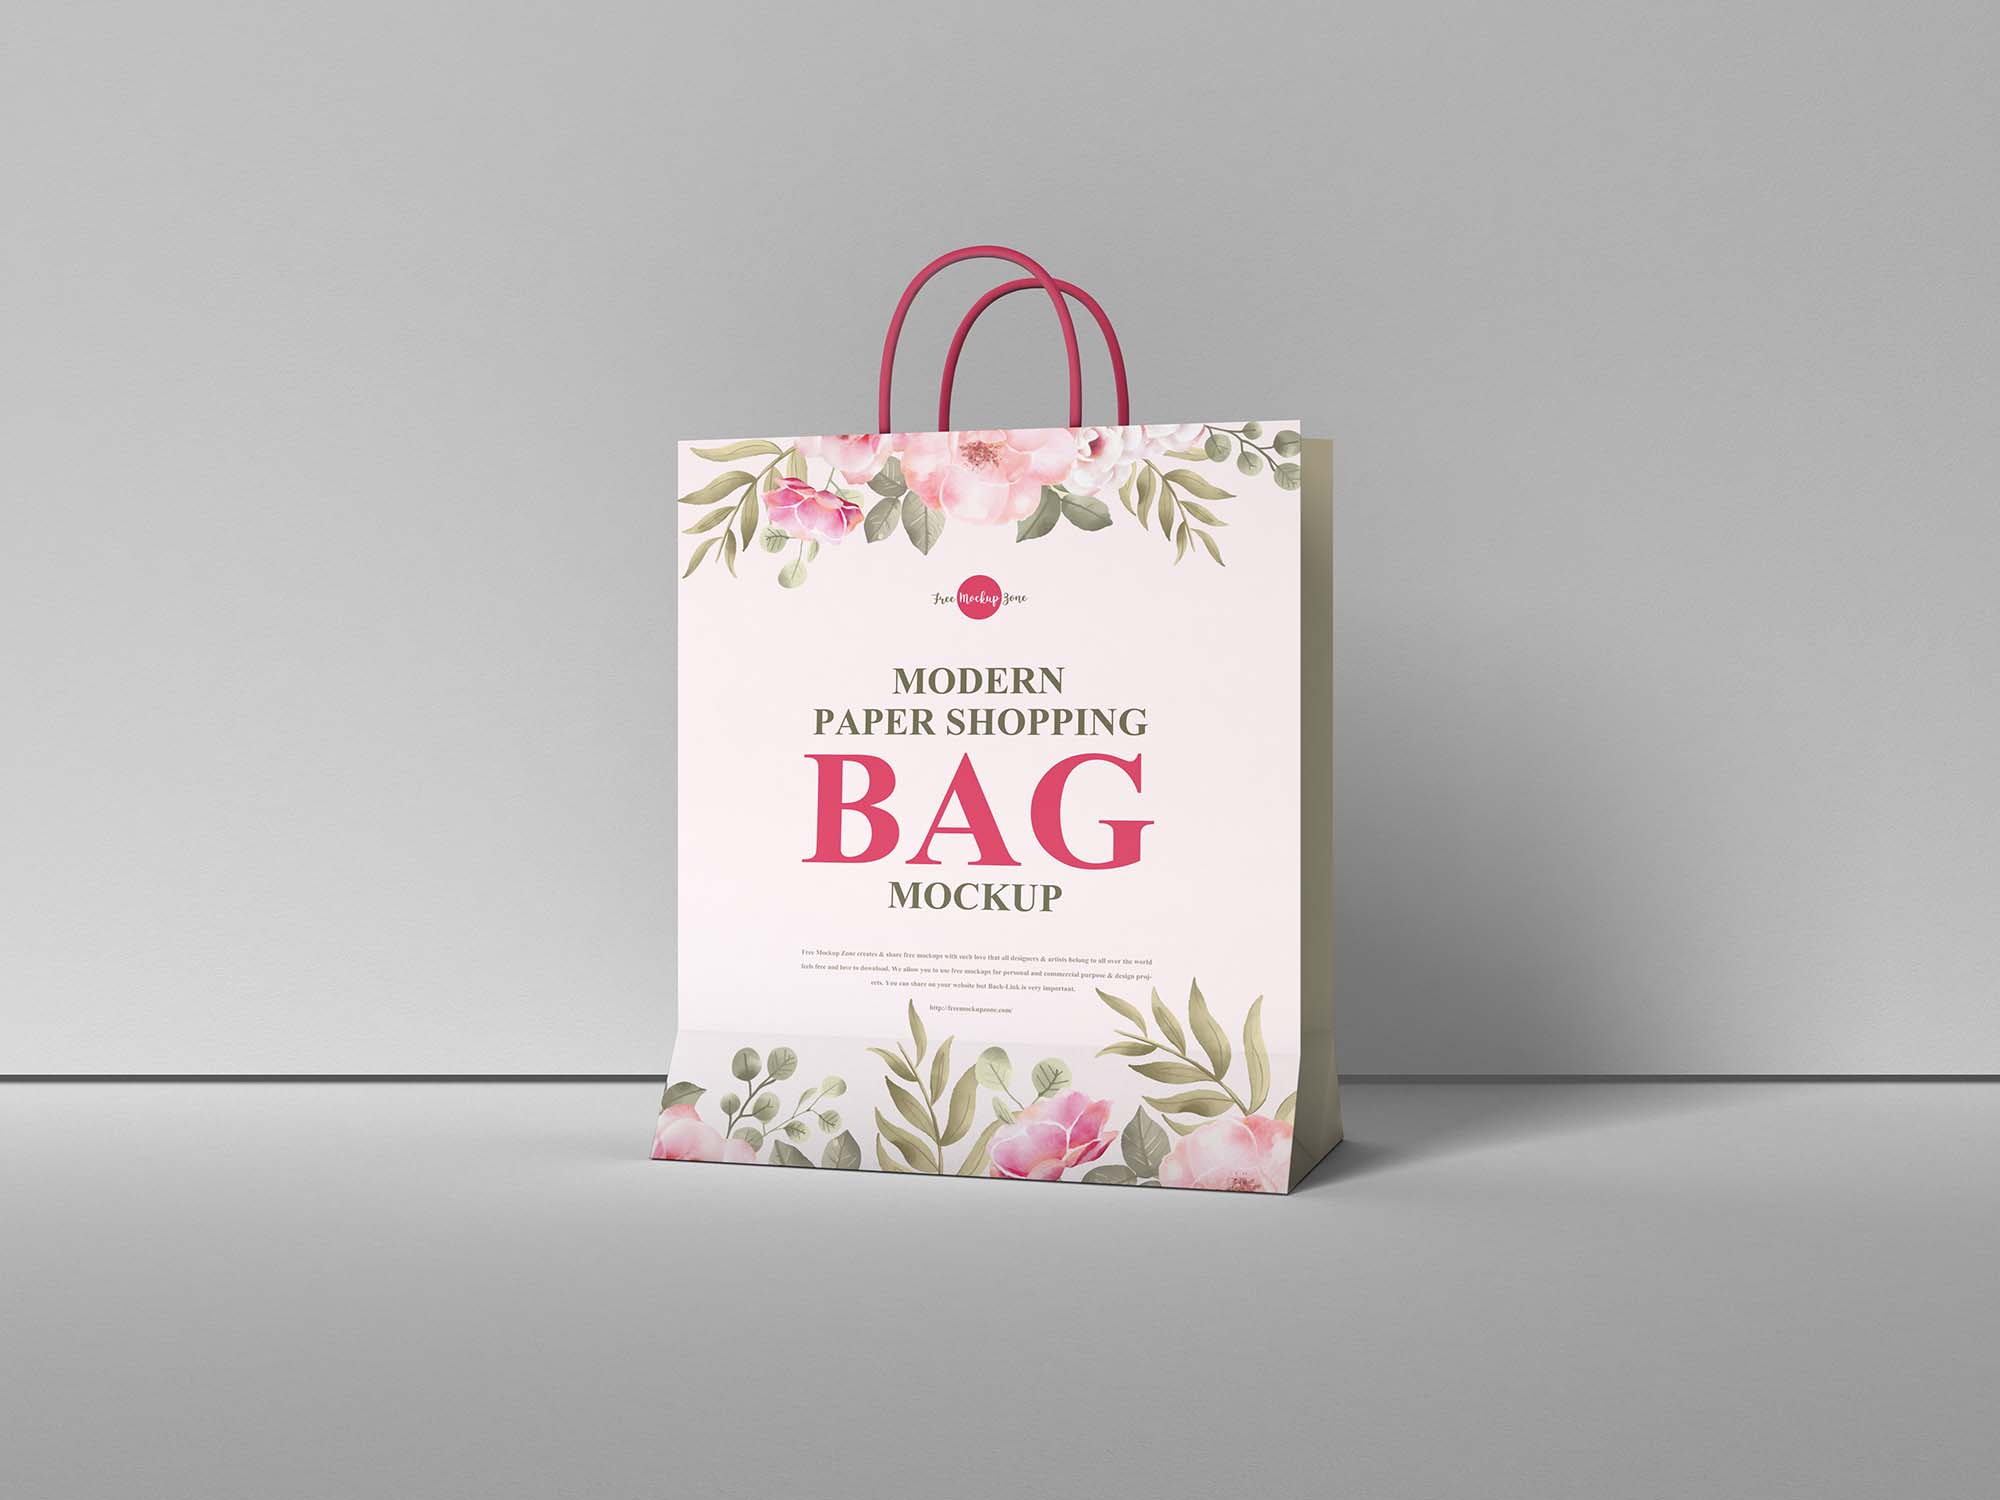 New Paper Shopping Bag Mockup